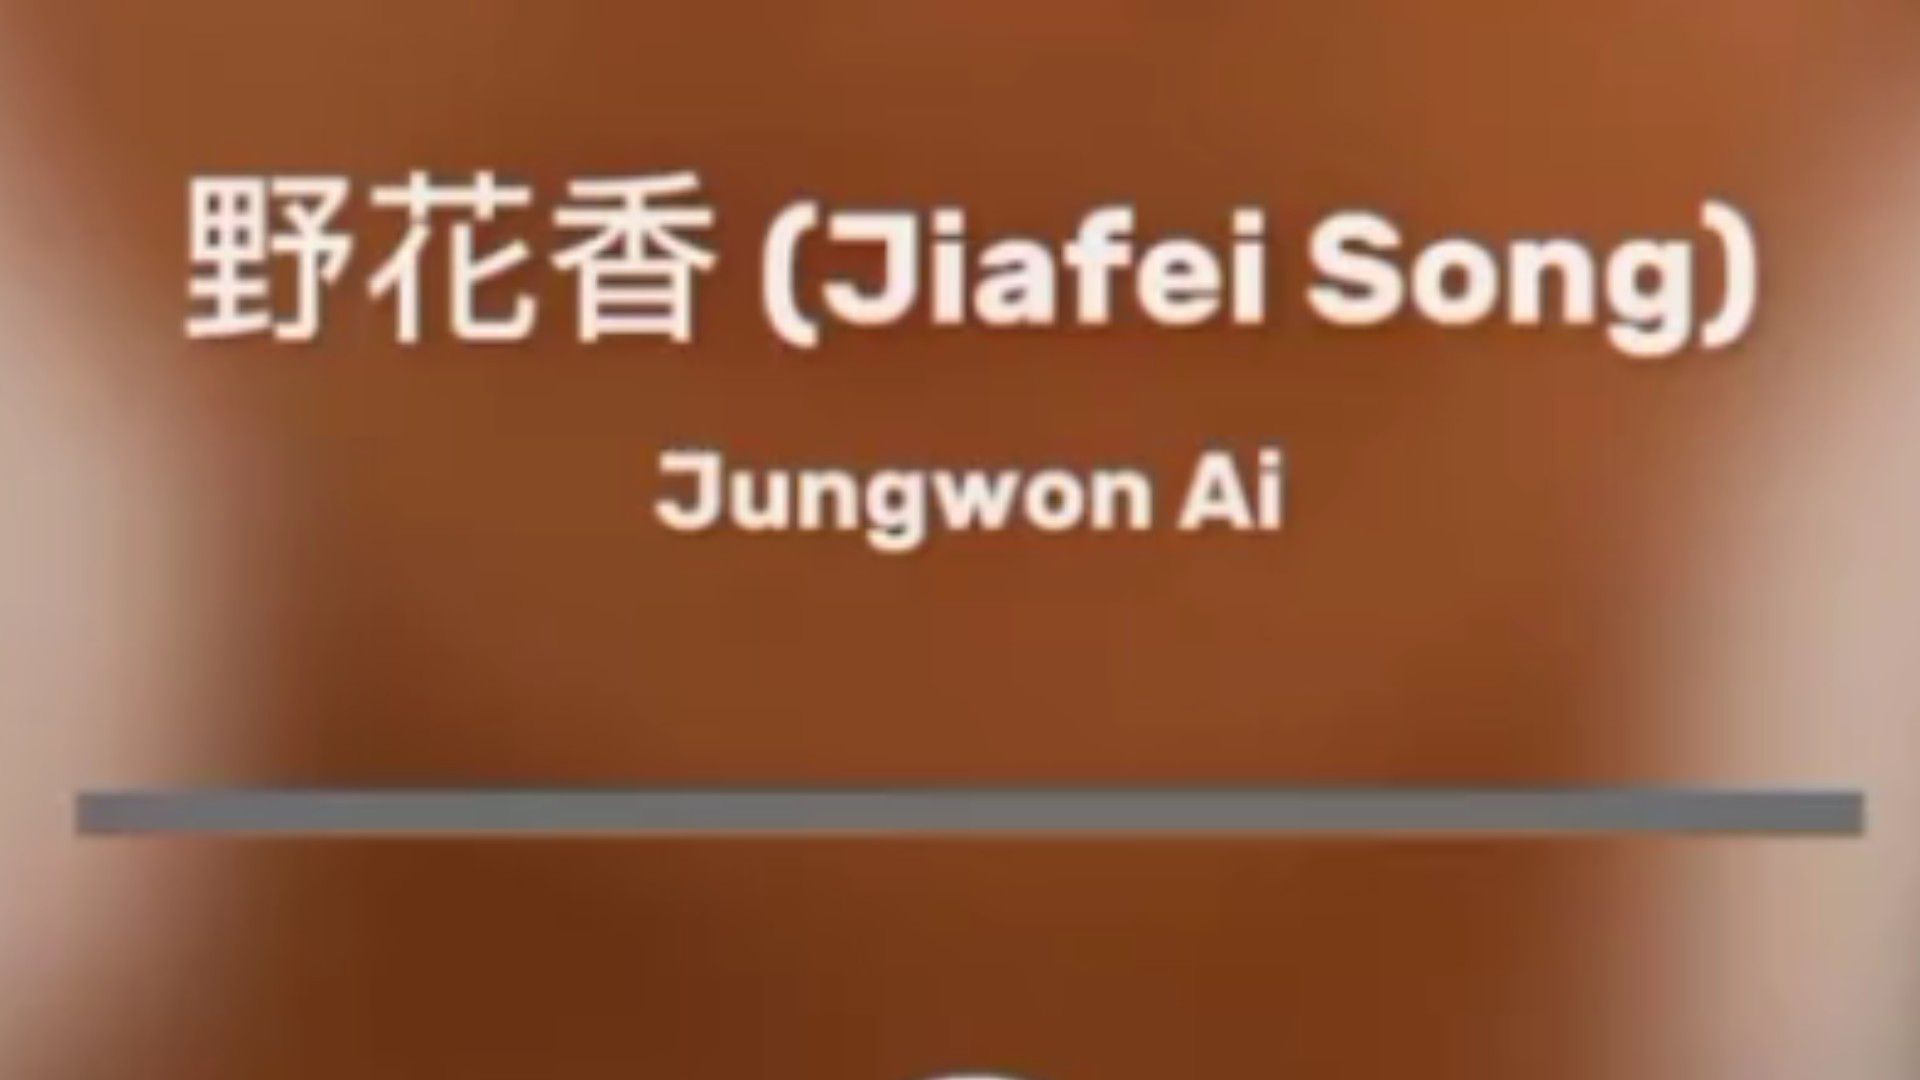 Jiafei lyrics with translations